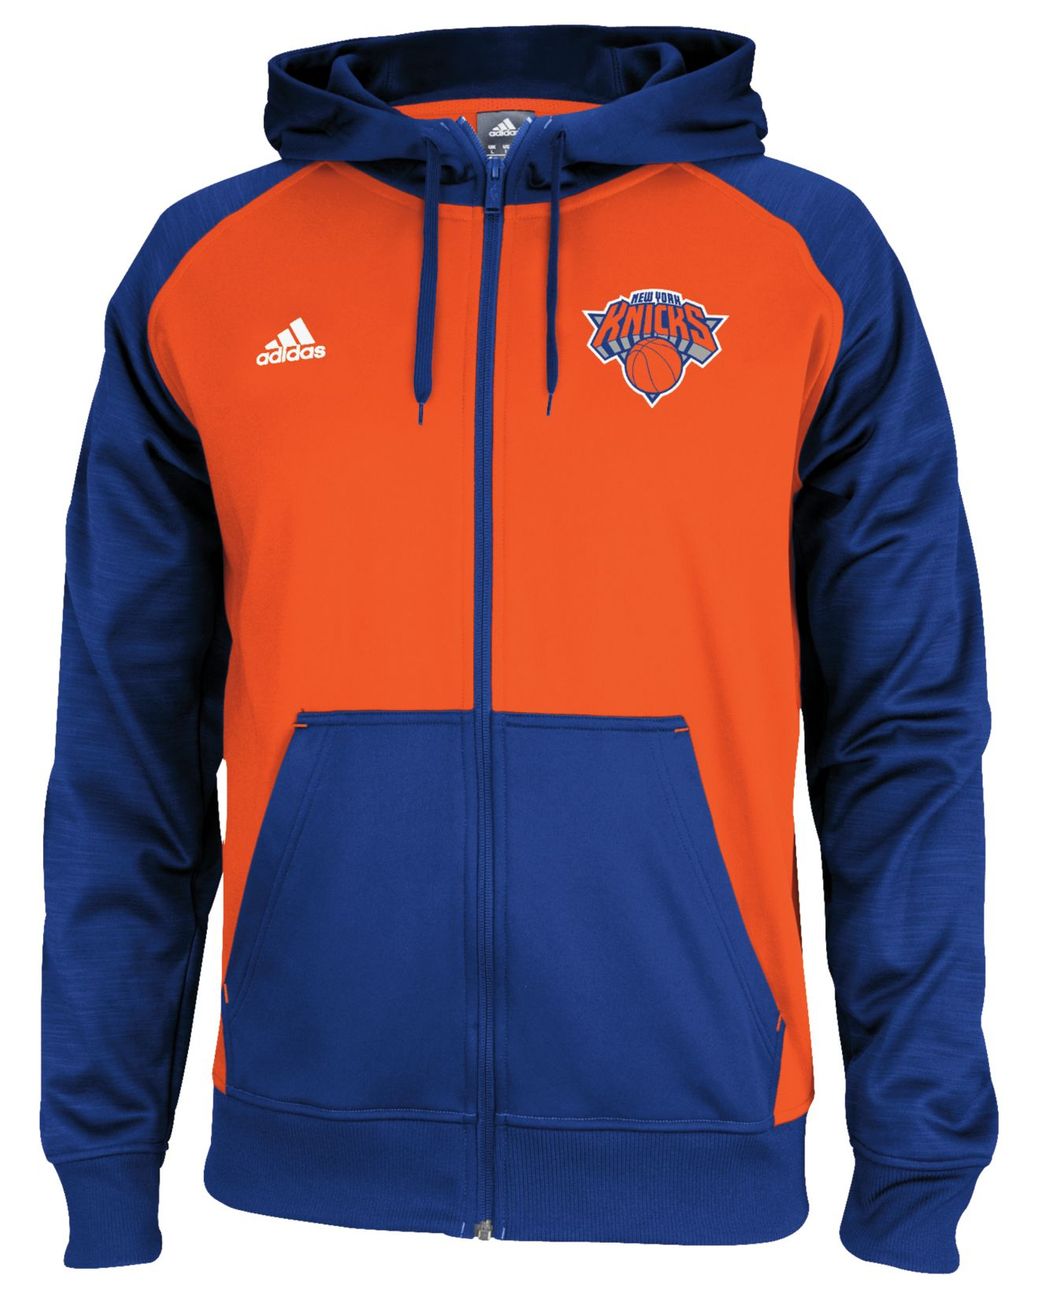 adidas, Jackets & Coats, Adidas New York Knicks Jacket